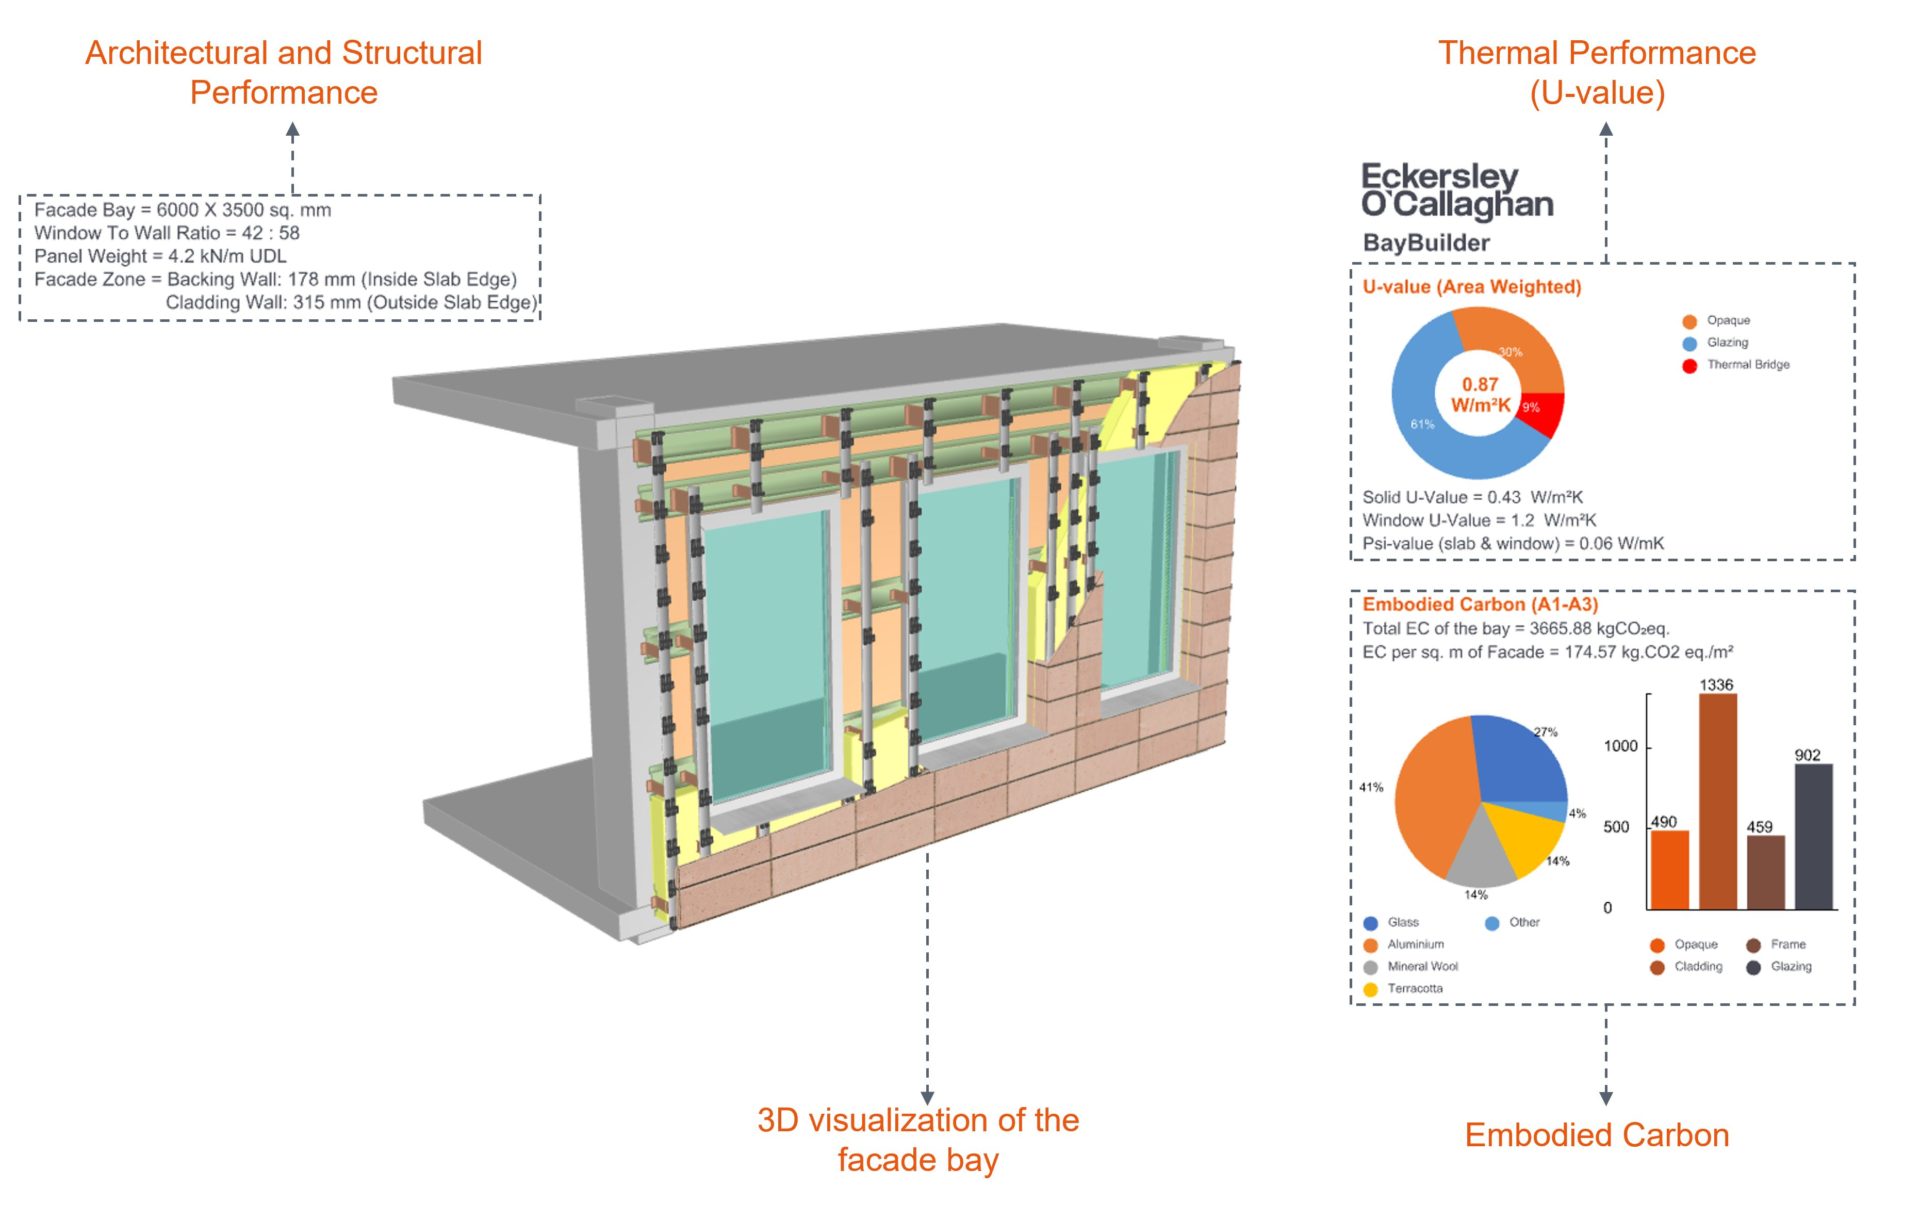 Digital Construction Awards Sustainability - Visualisation of Eckersley O’Callaghan's facade bay optioneering tool, called BayBuilder 